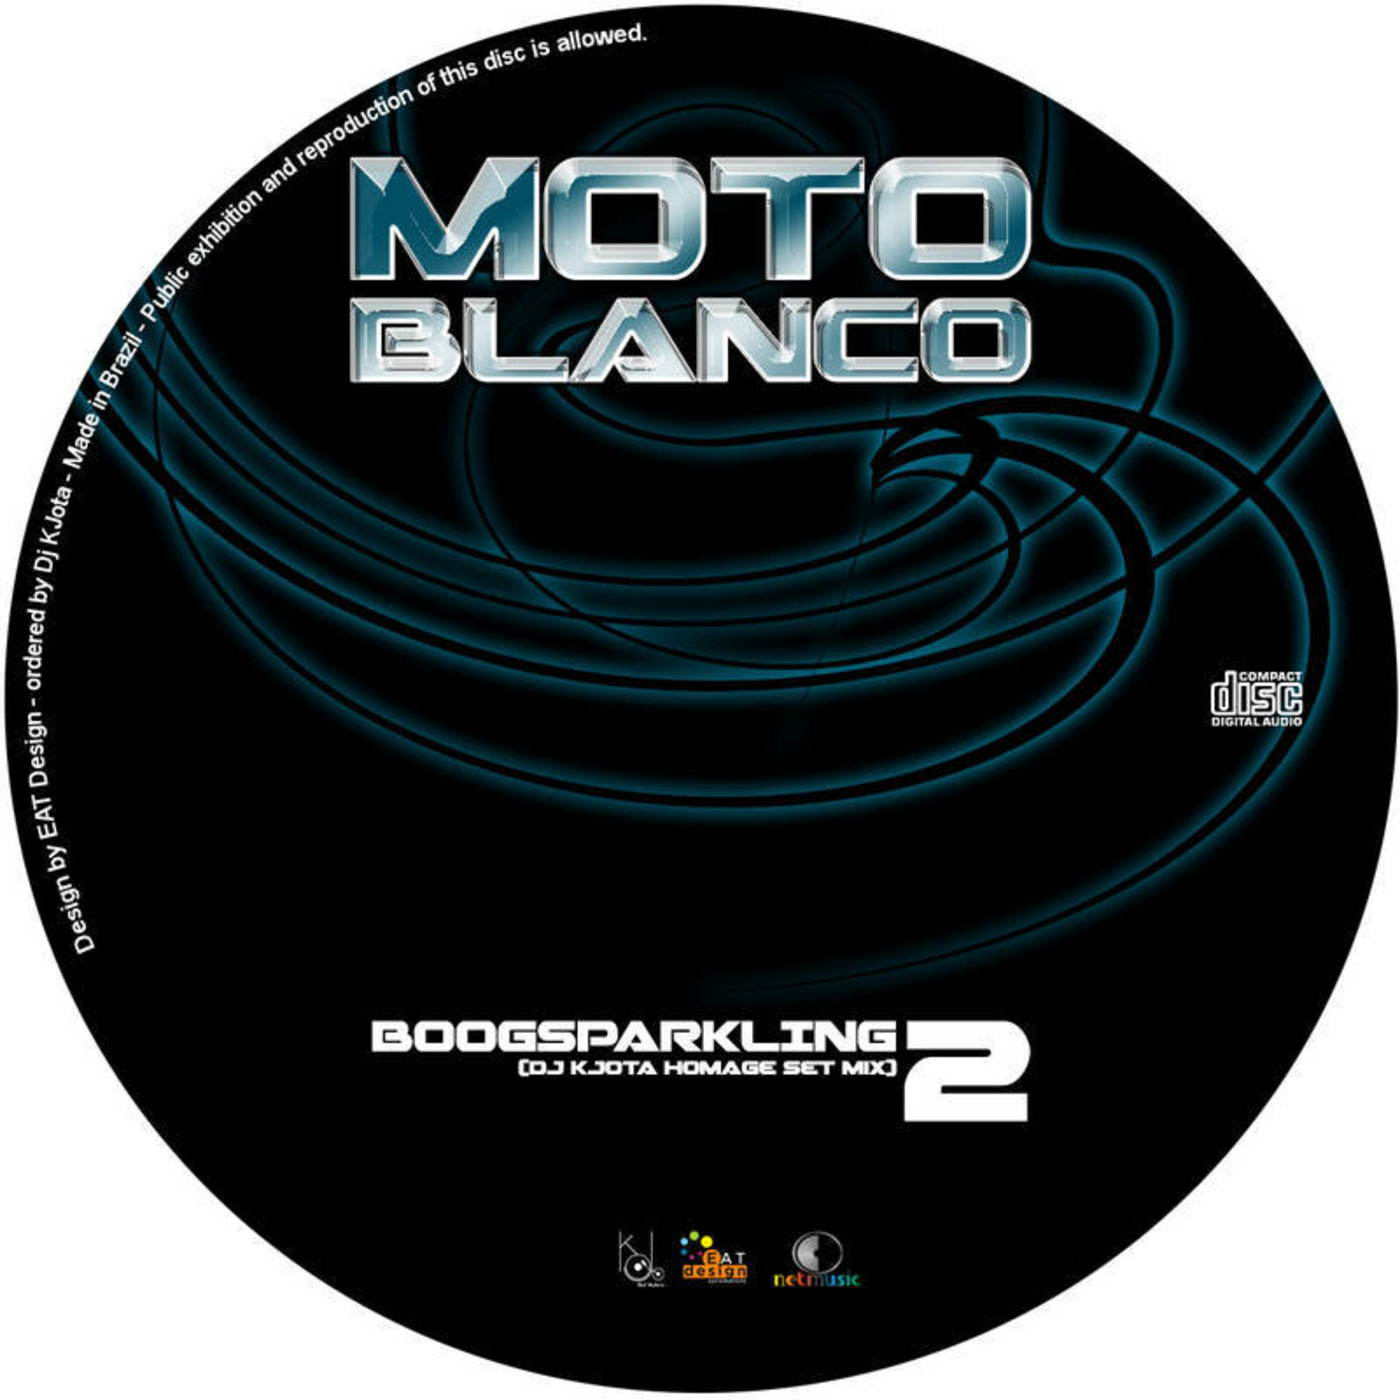 Moto Blanco BoogSparkling 2 (DJ KJota Homage Set Mix)